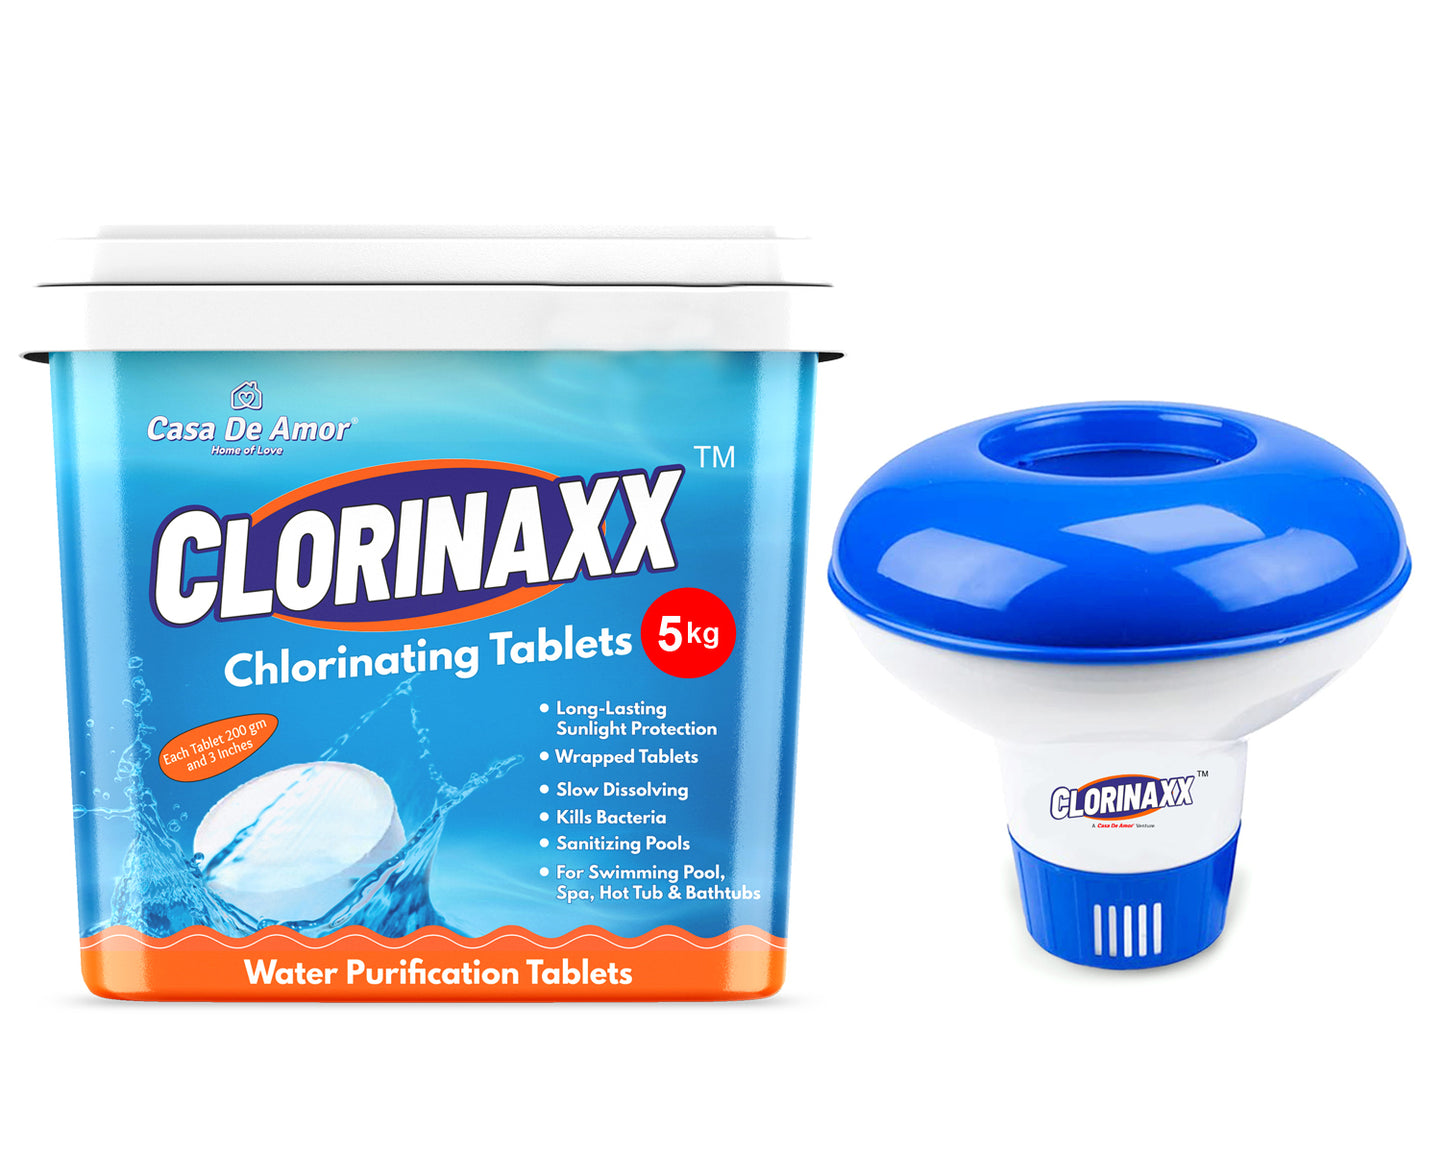 Clorinaxx Water Purifier Chlorine Tablet (TCCA 90) and Floating Chlorine Dispenser